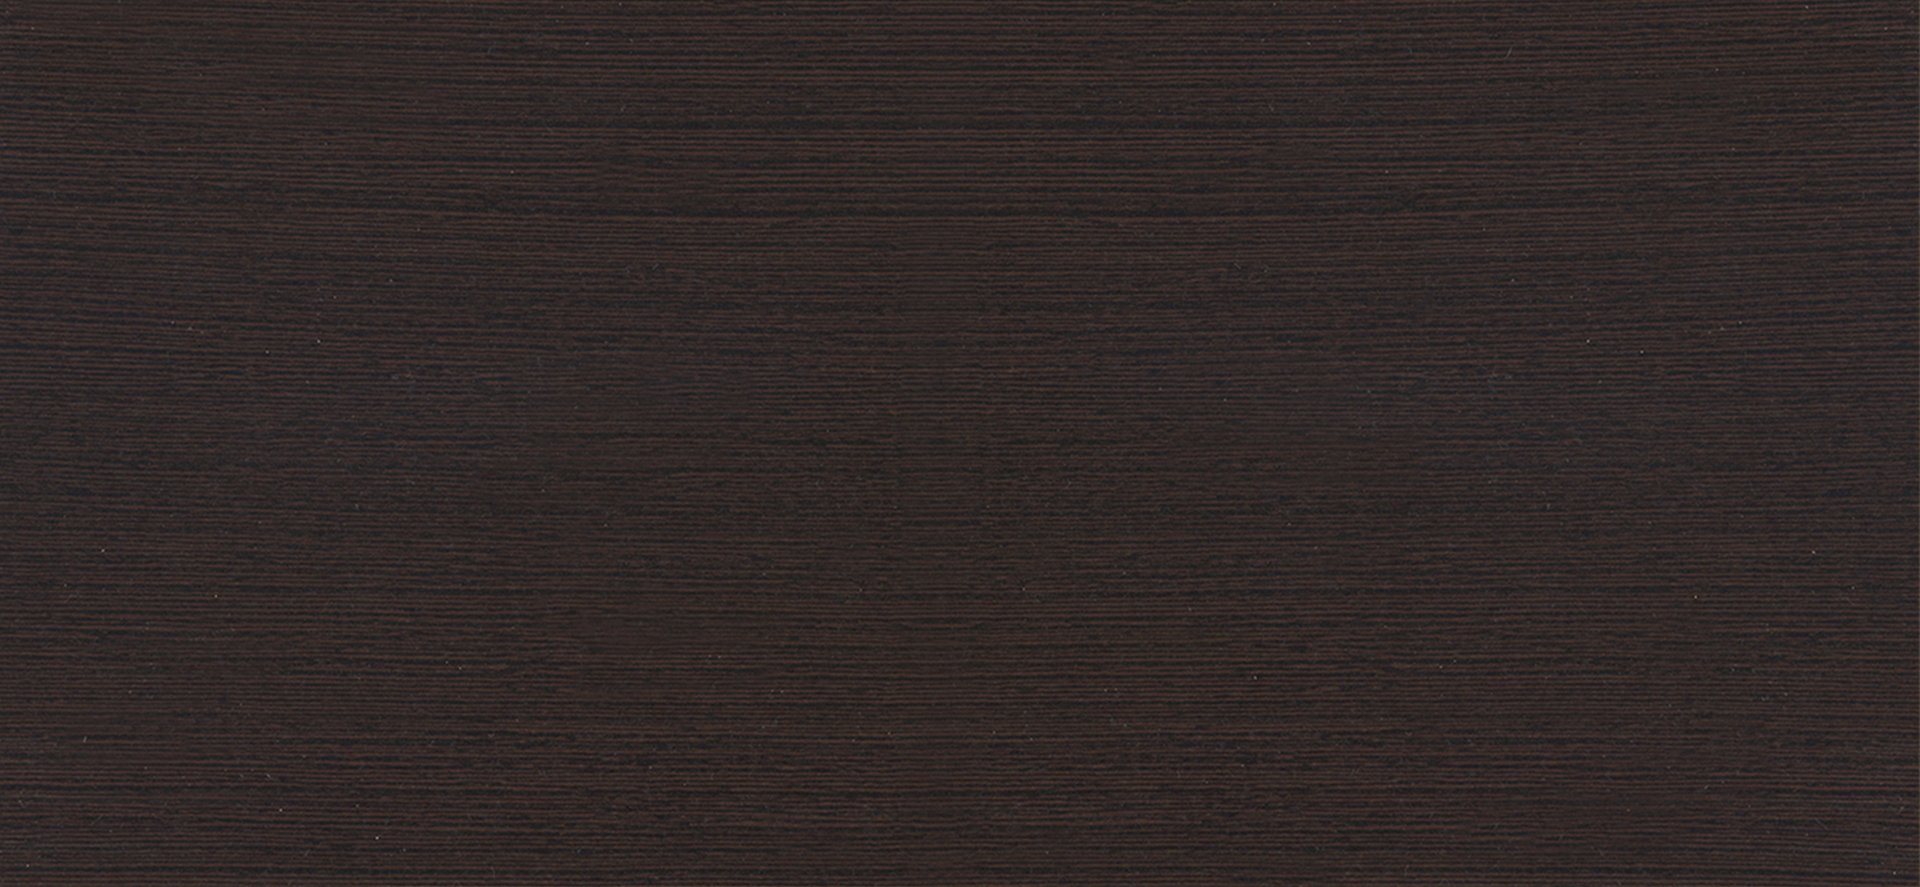 ЛДСП дуб термо чёрно-коричневый (h1199 st12)